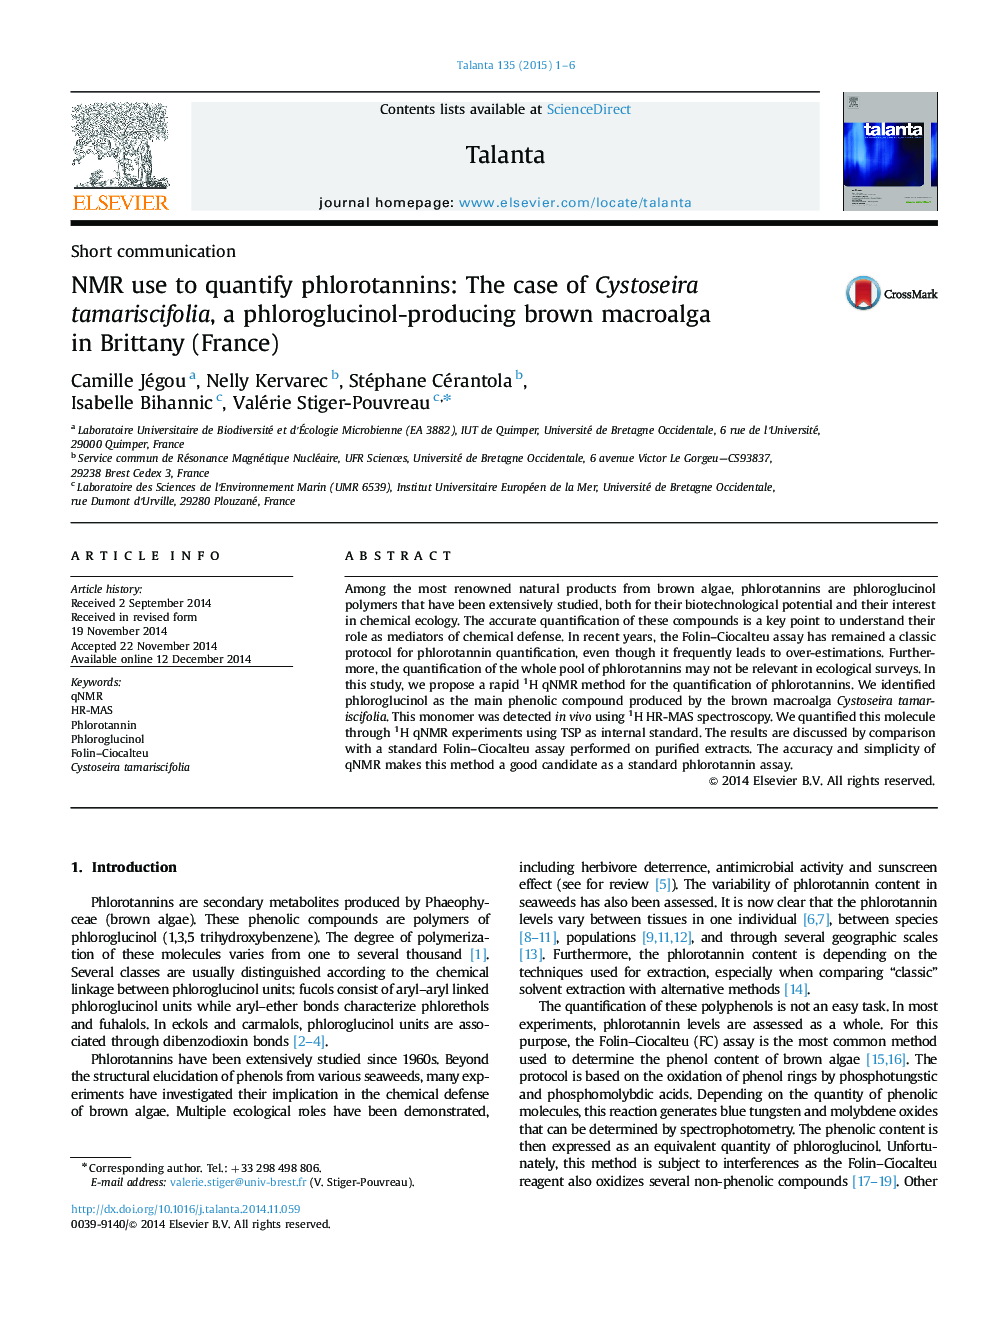 NMR use to quantify phlorotannins: The case of Cystoseira tamariscifolia, a phloroglucinol-producing brown macroalga in Brittany (France)